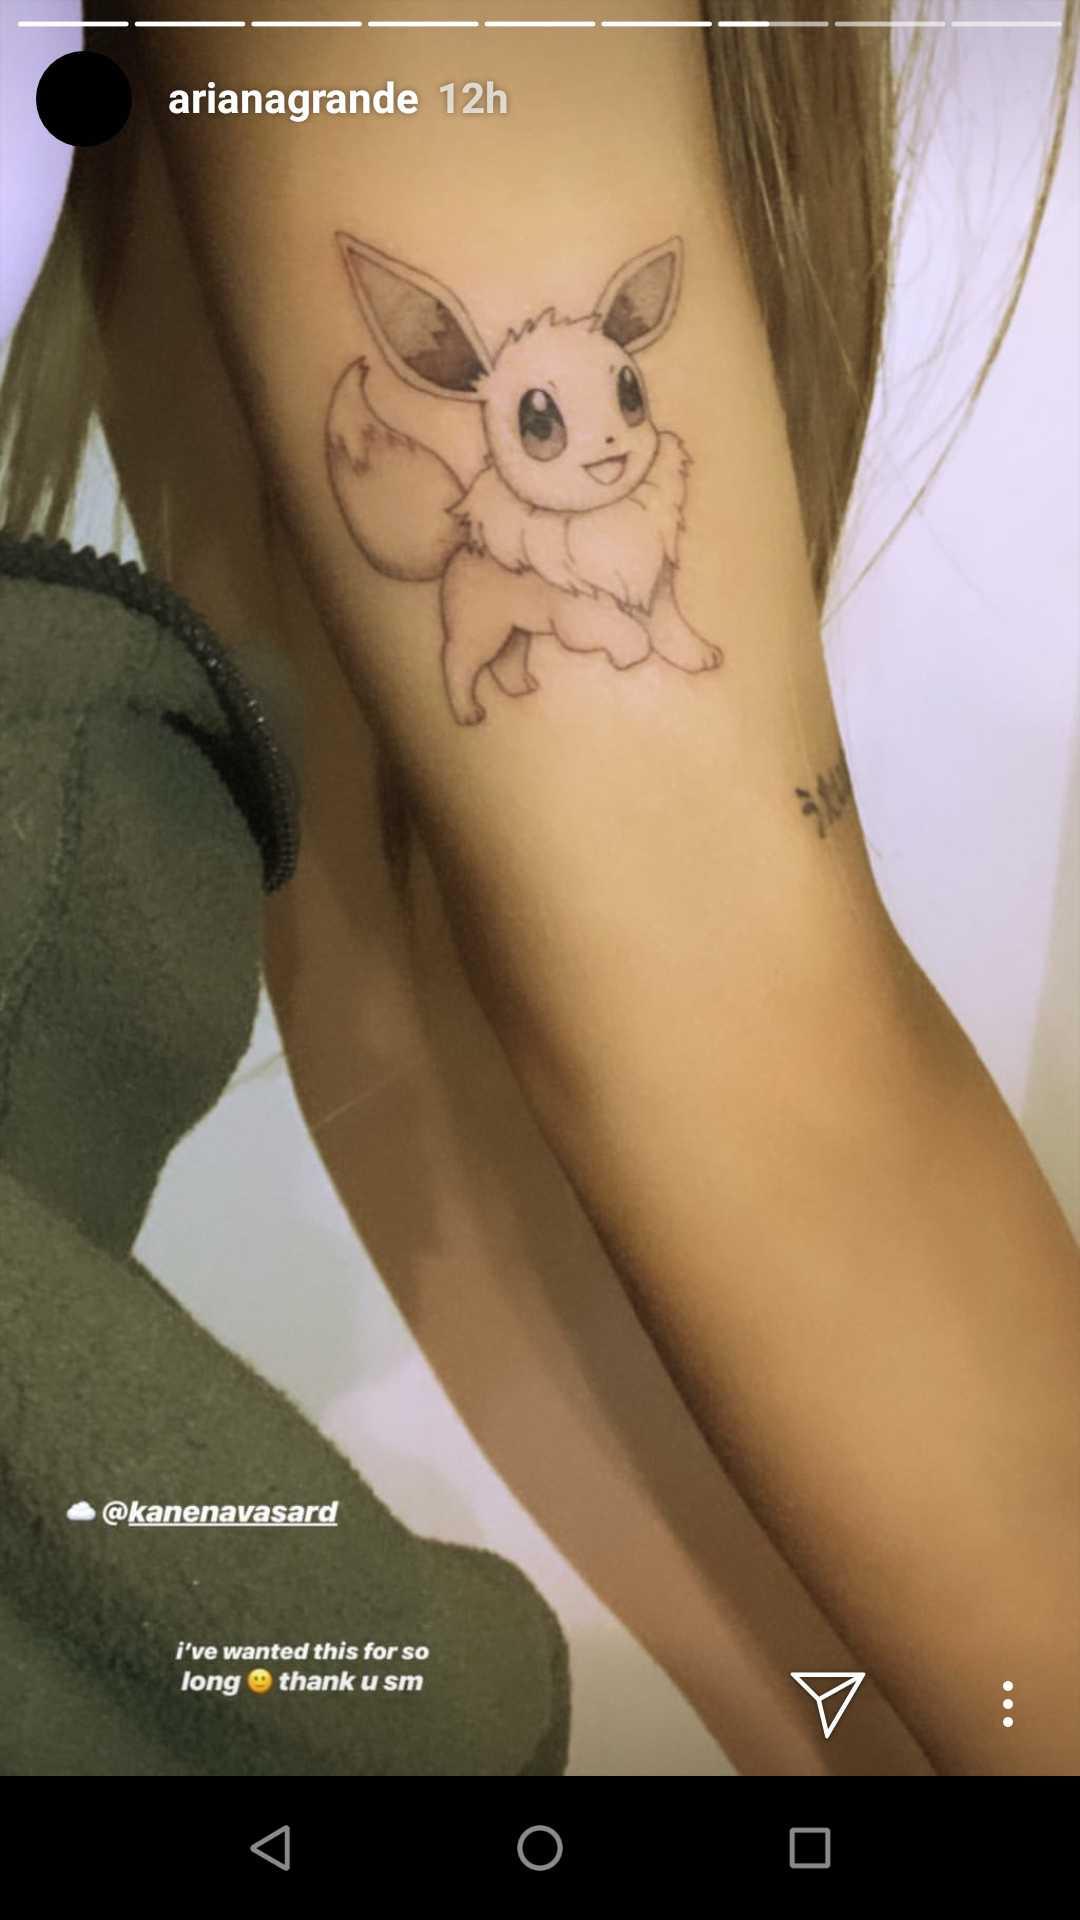 screenshot of Ariana Grande's tattoo